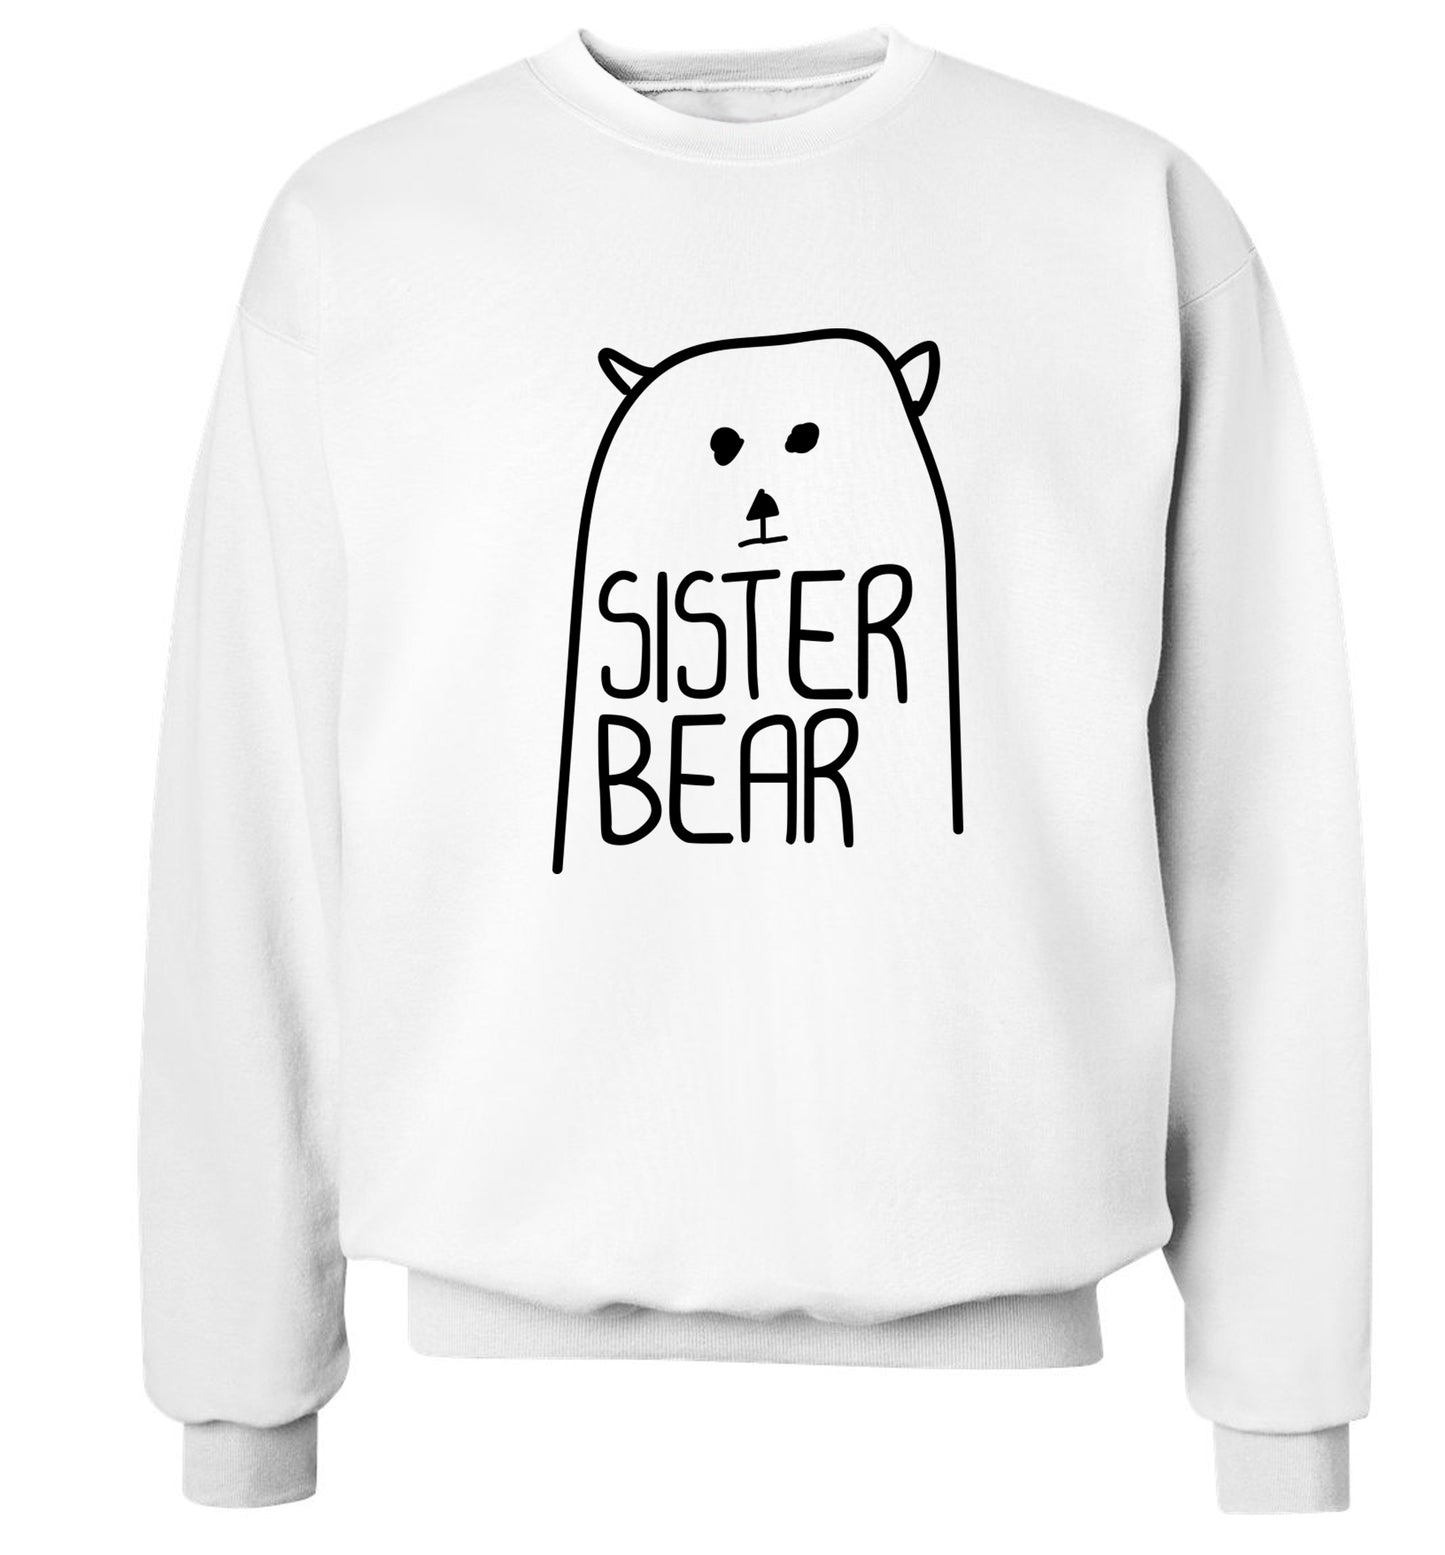 Sister bear Adult's unisex white Sweater 2XL